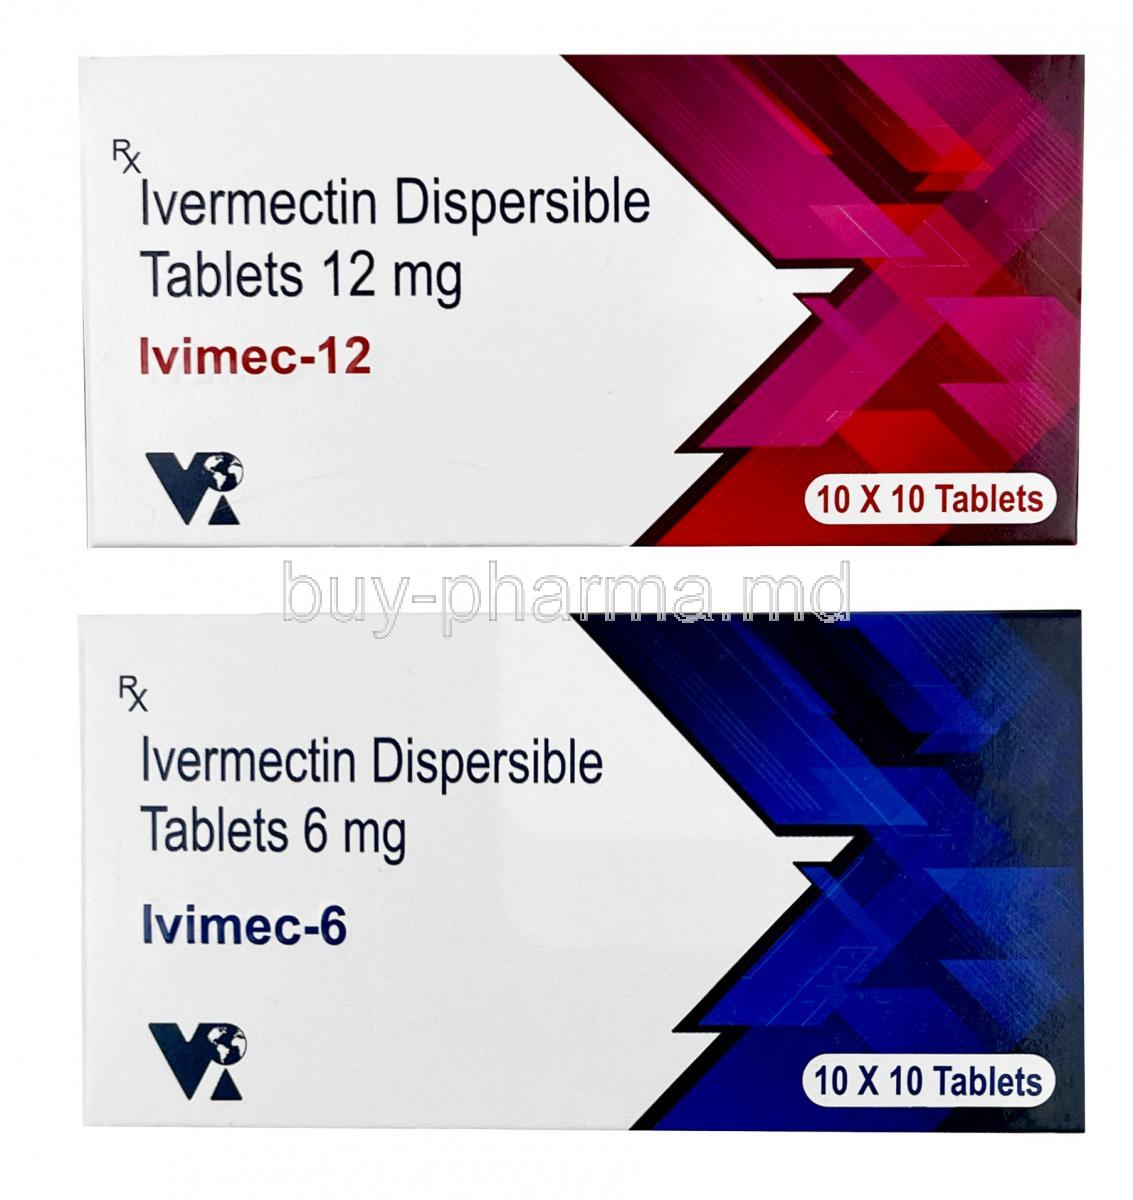 Ivimec, Ivermectin 6mg box and tablets